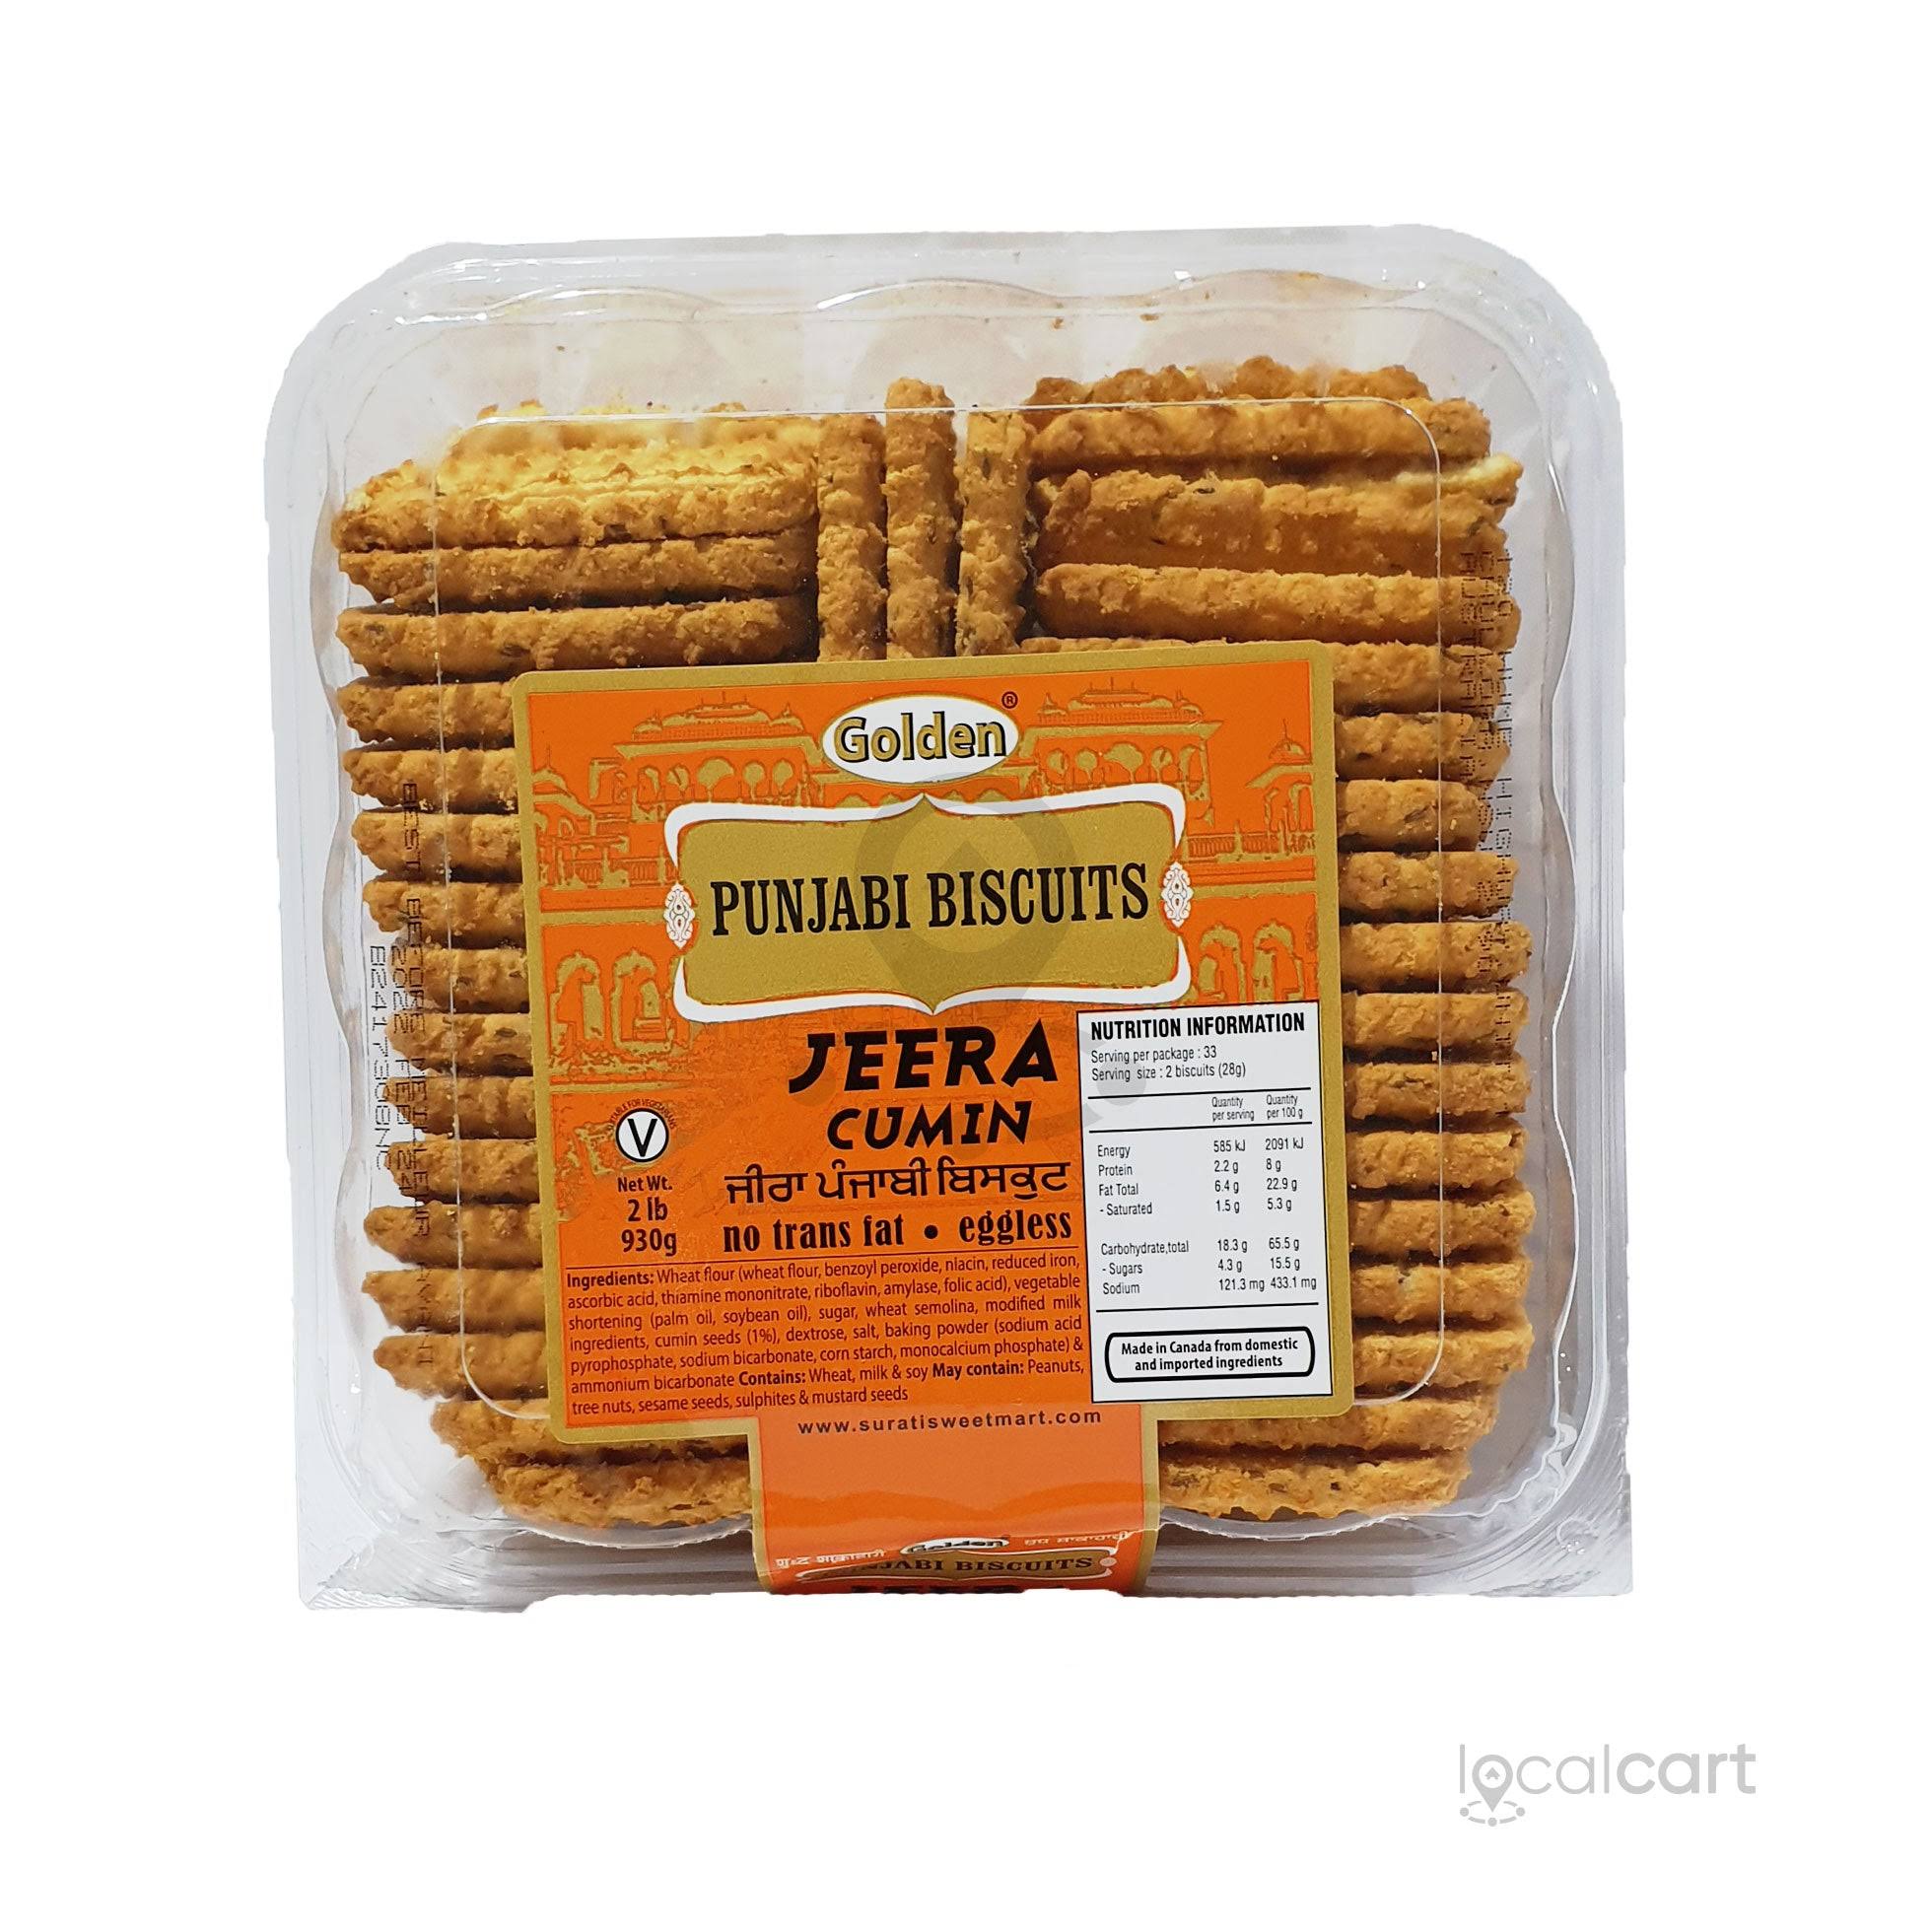 Golden Punjabi Biscuits (Jeera) 930g